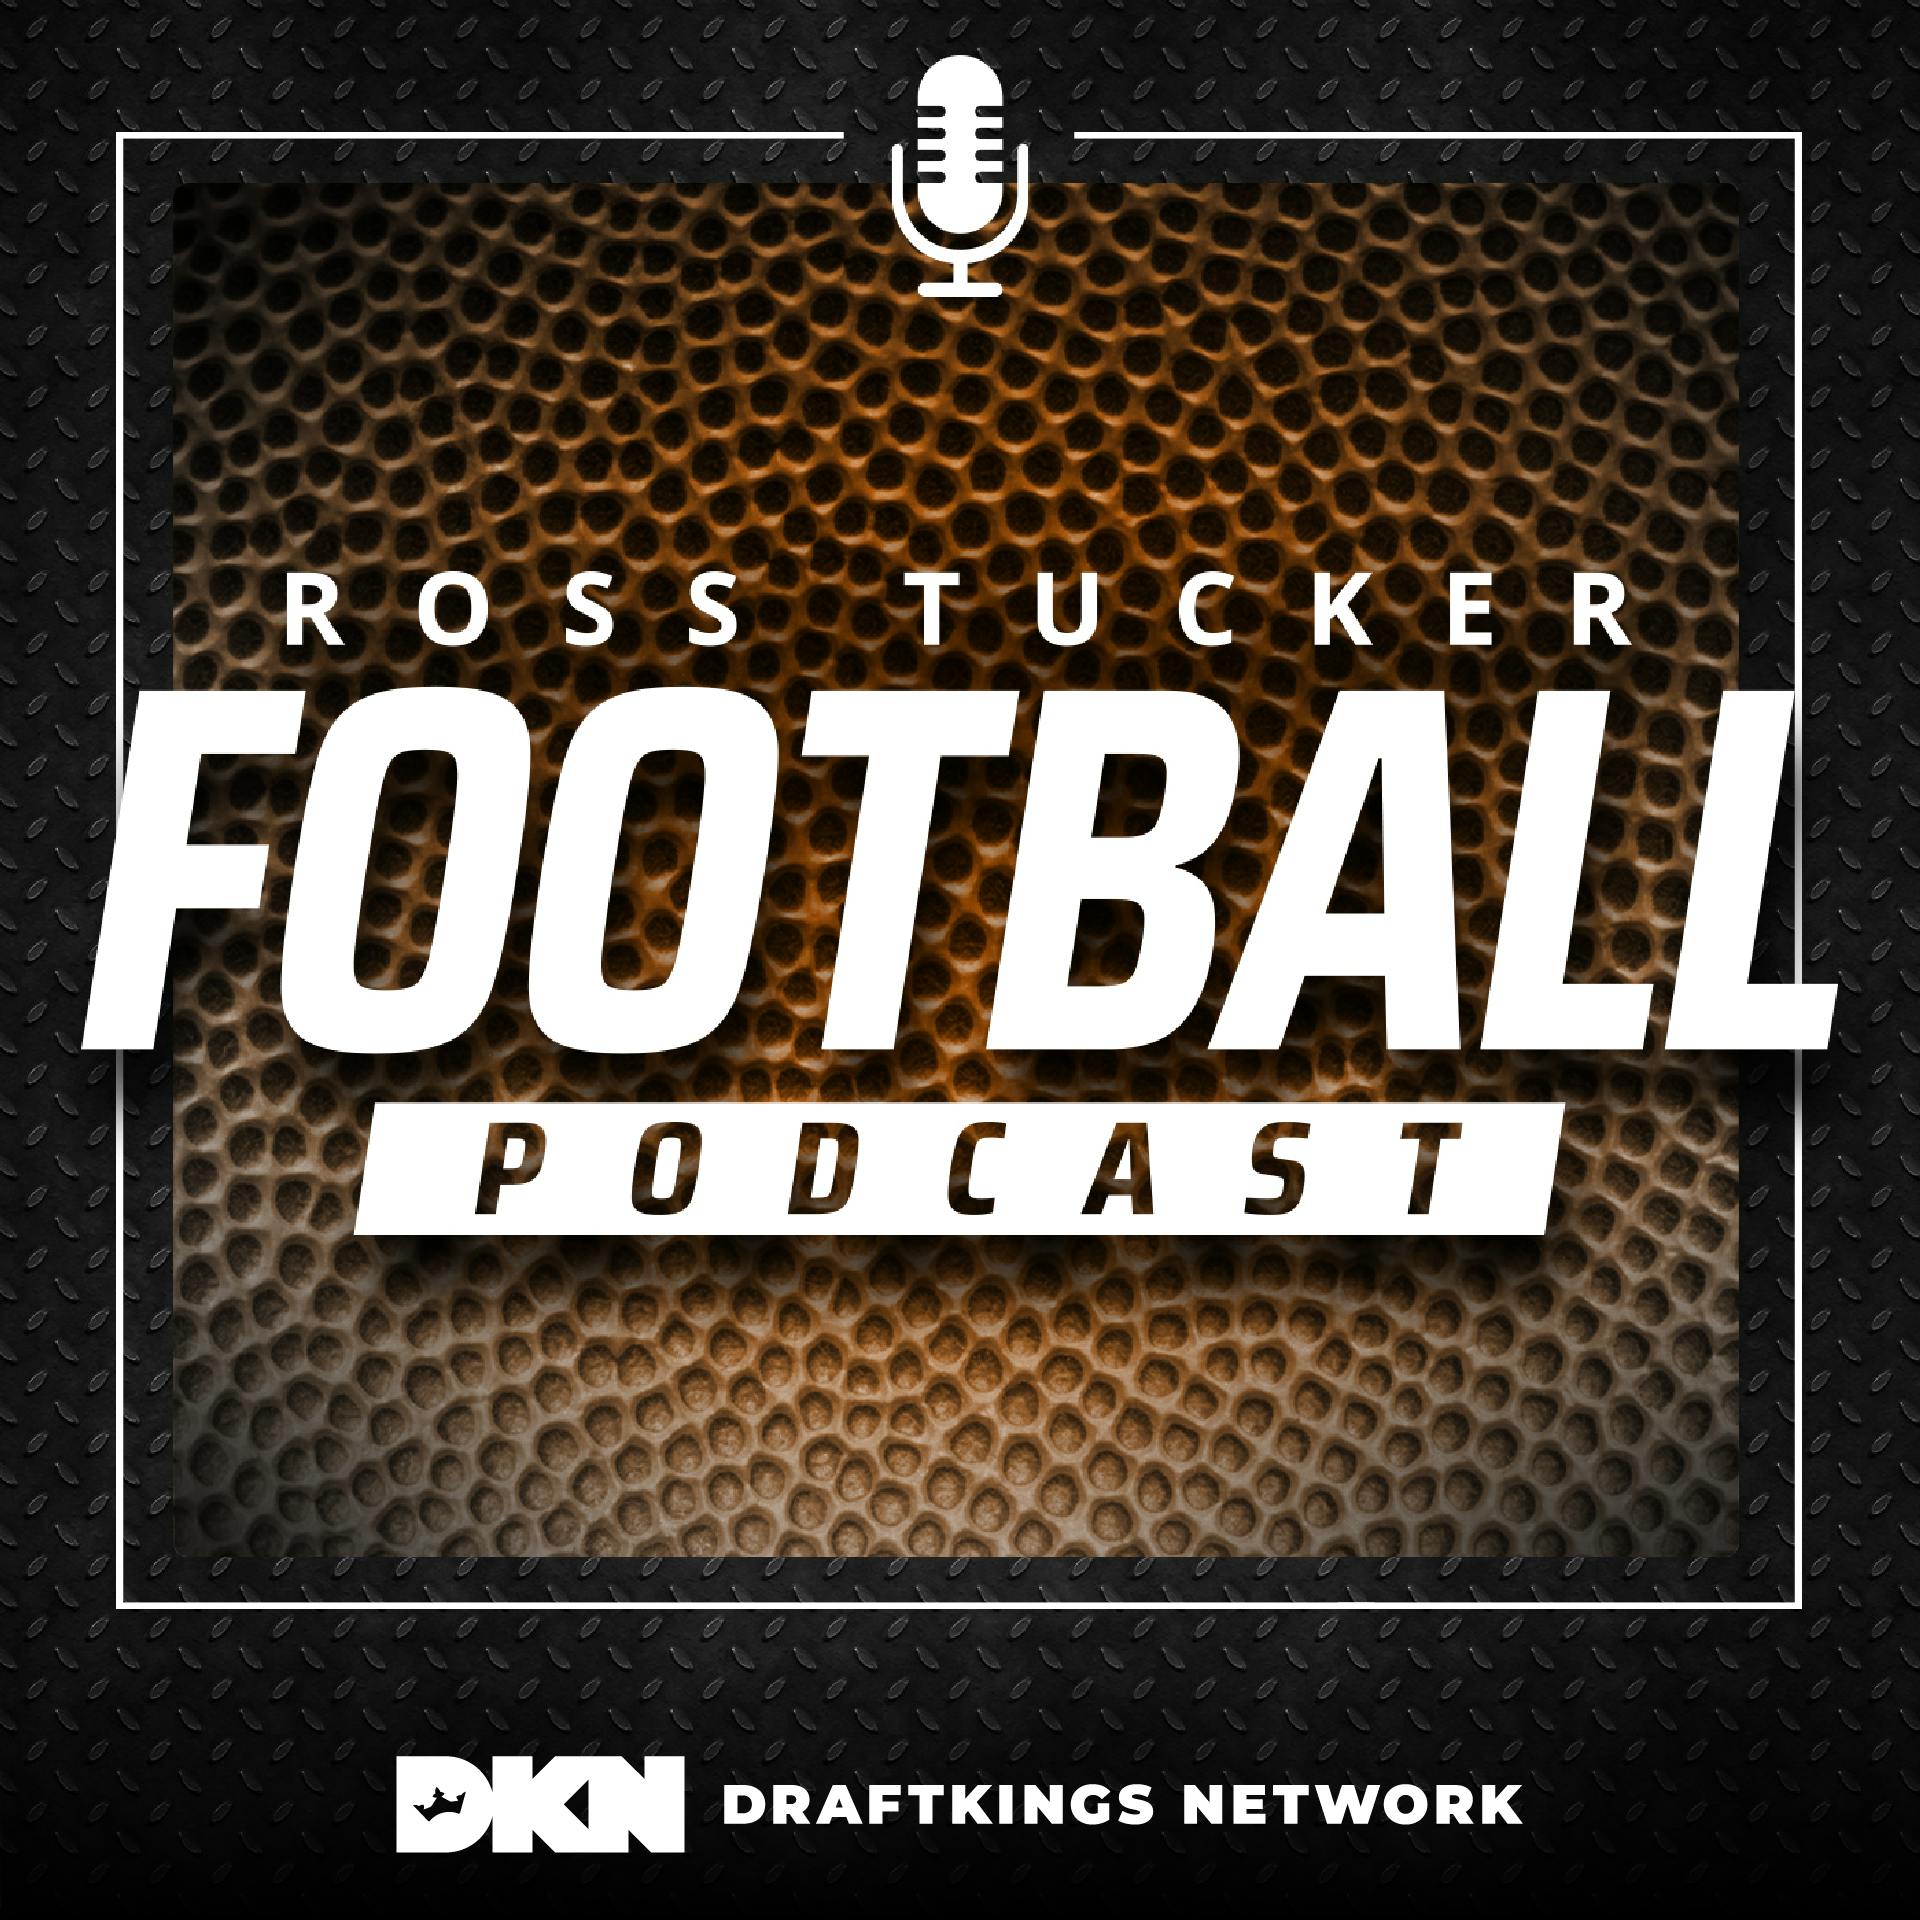 Ross Tucker Football Podcast podcast